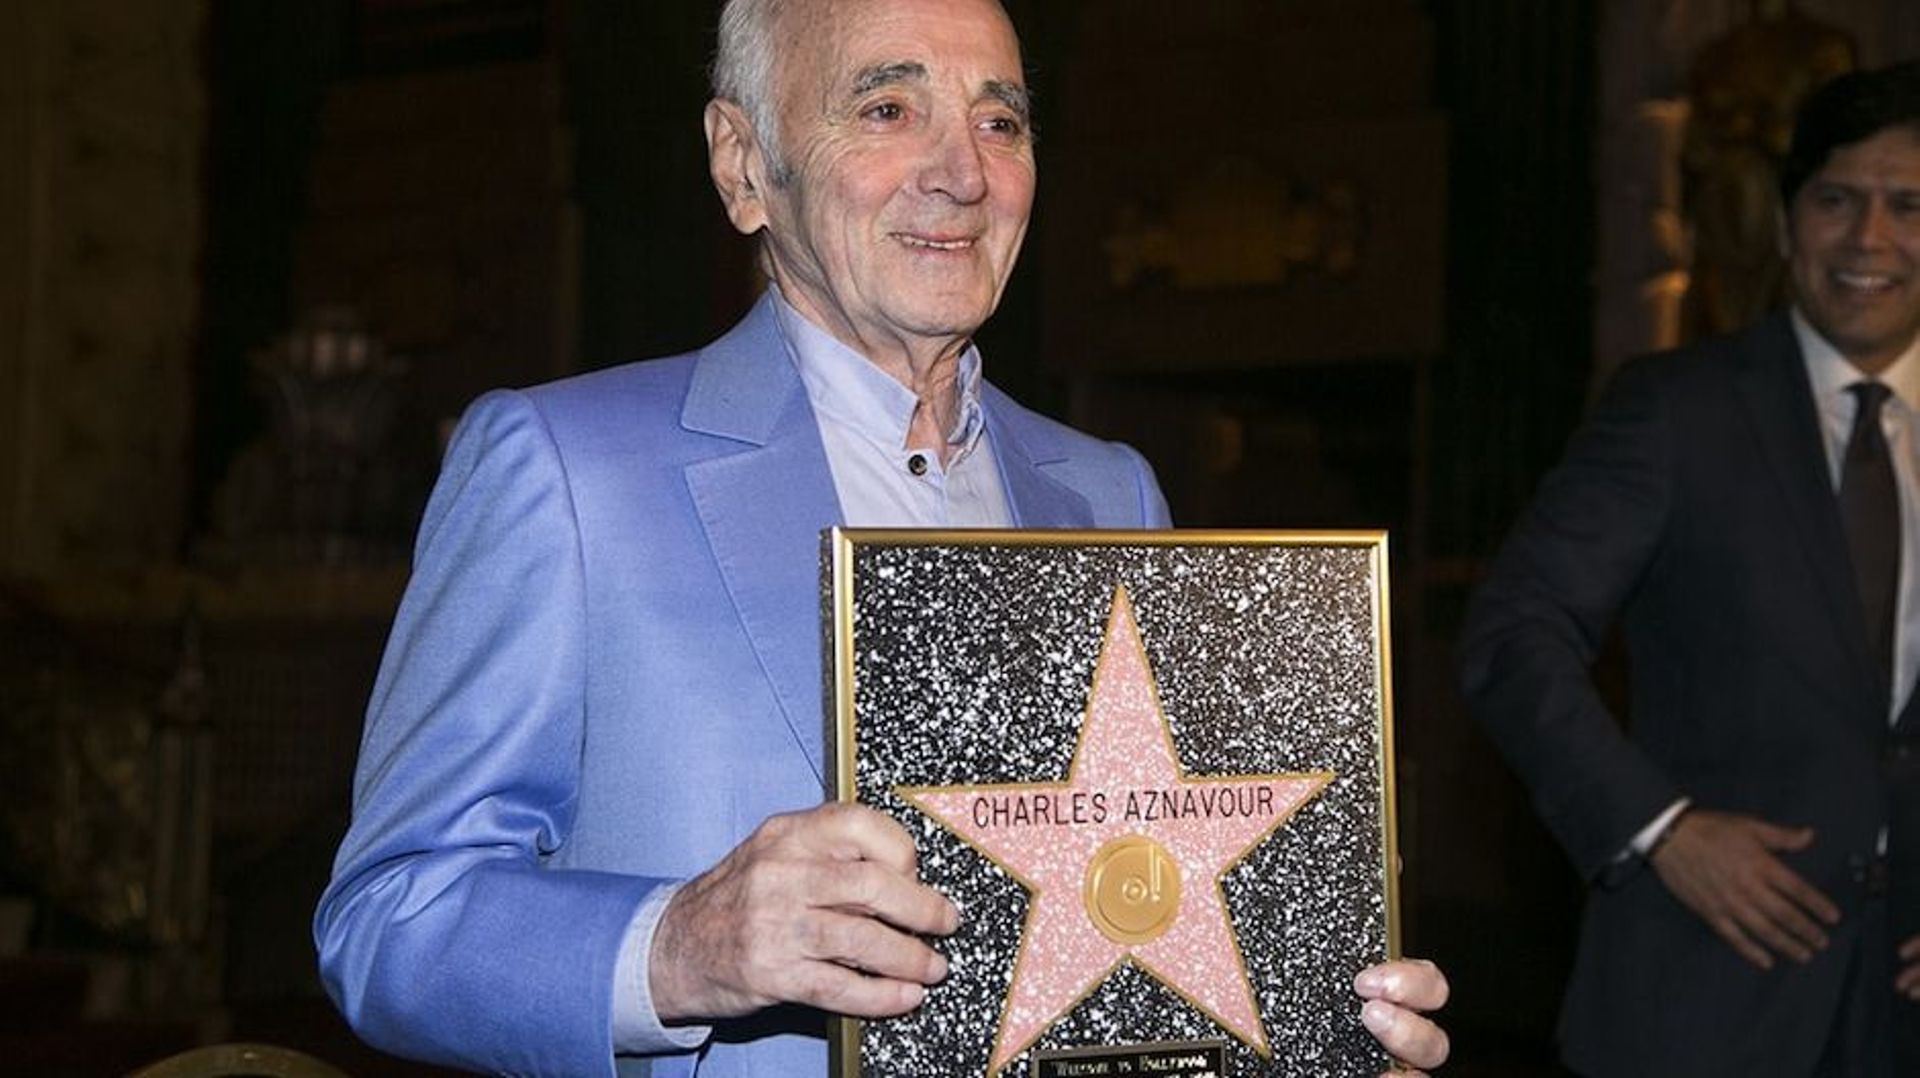 Charles Aznavour, narcissique?